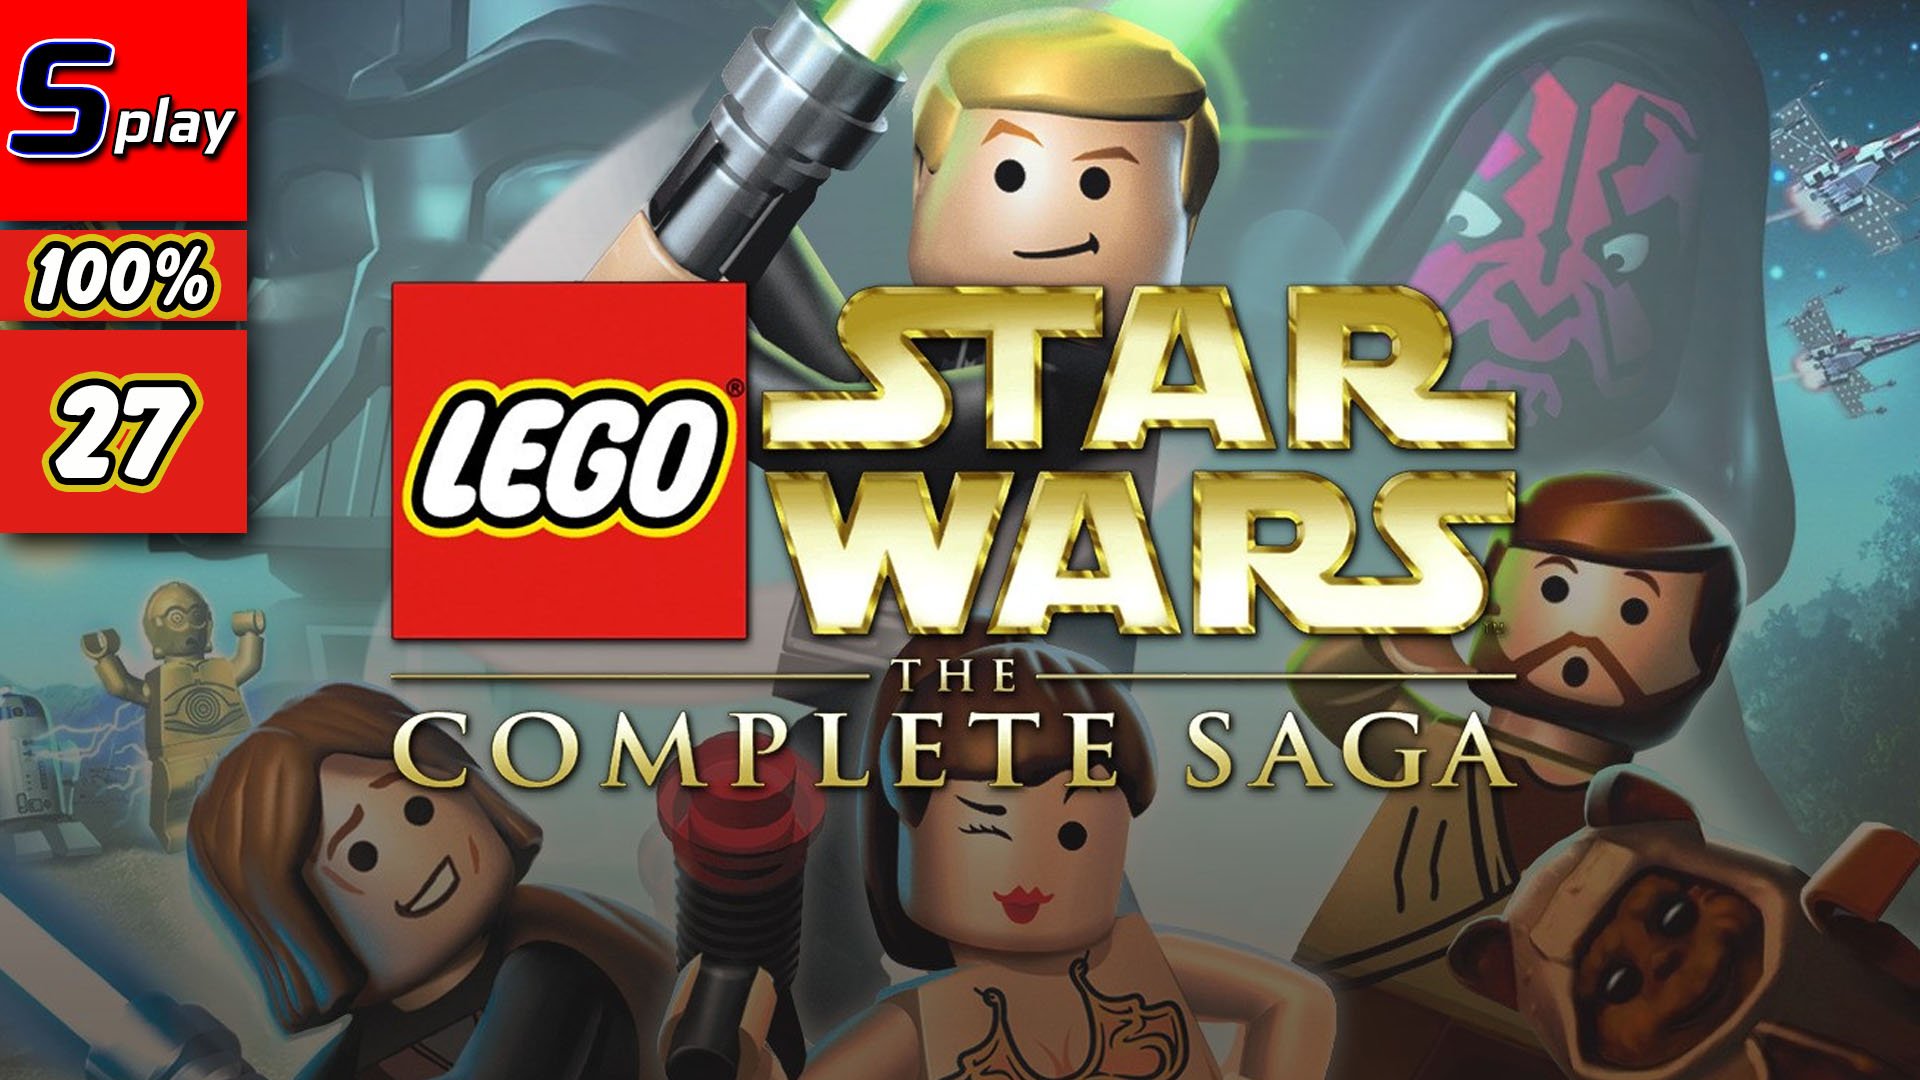 Lego Star Wars The Complete Saga на 100% - [26] - Финал собирательства